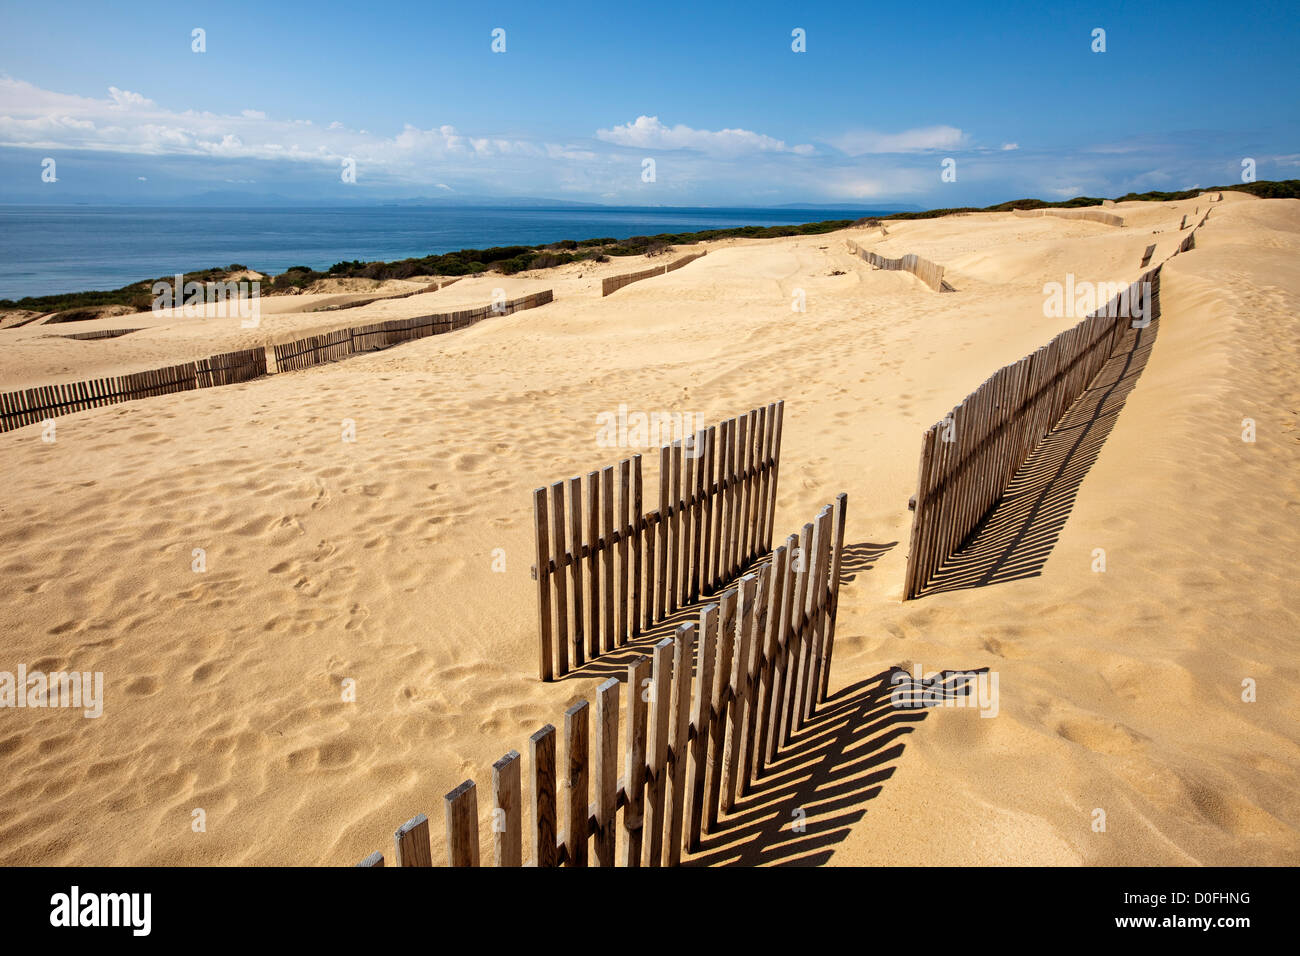 Les dunes et la plage de Punta Paloma Tarifa Cadiz Andalousie Espagne Dunas y Playa Punta Paloma Tarifa Cádiz andalousie España Banque D'Images